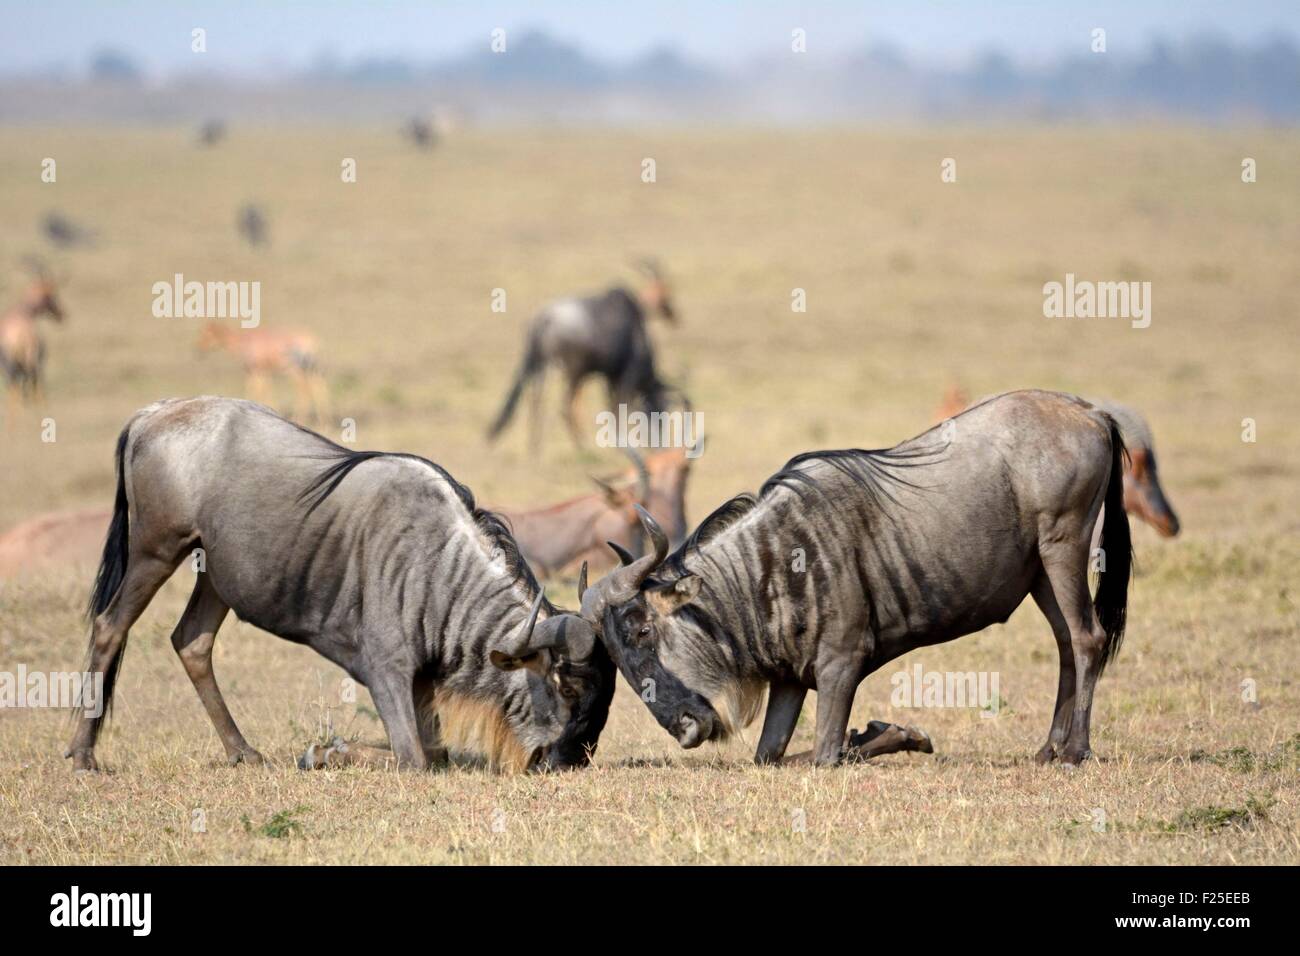 Kenya, Masai Mara Reserve, Wildebeest (Connochaetes), face to face in a game scene in Savannah Stock Photo